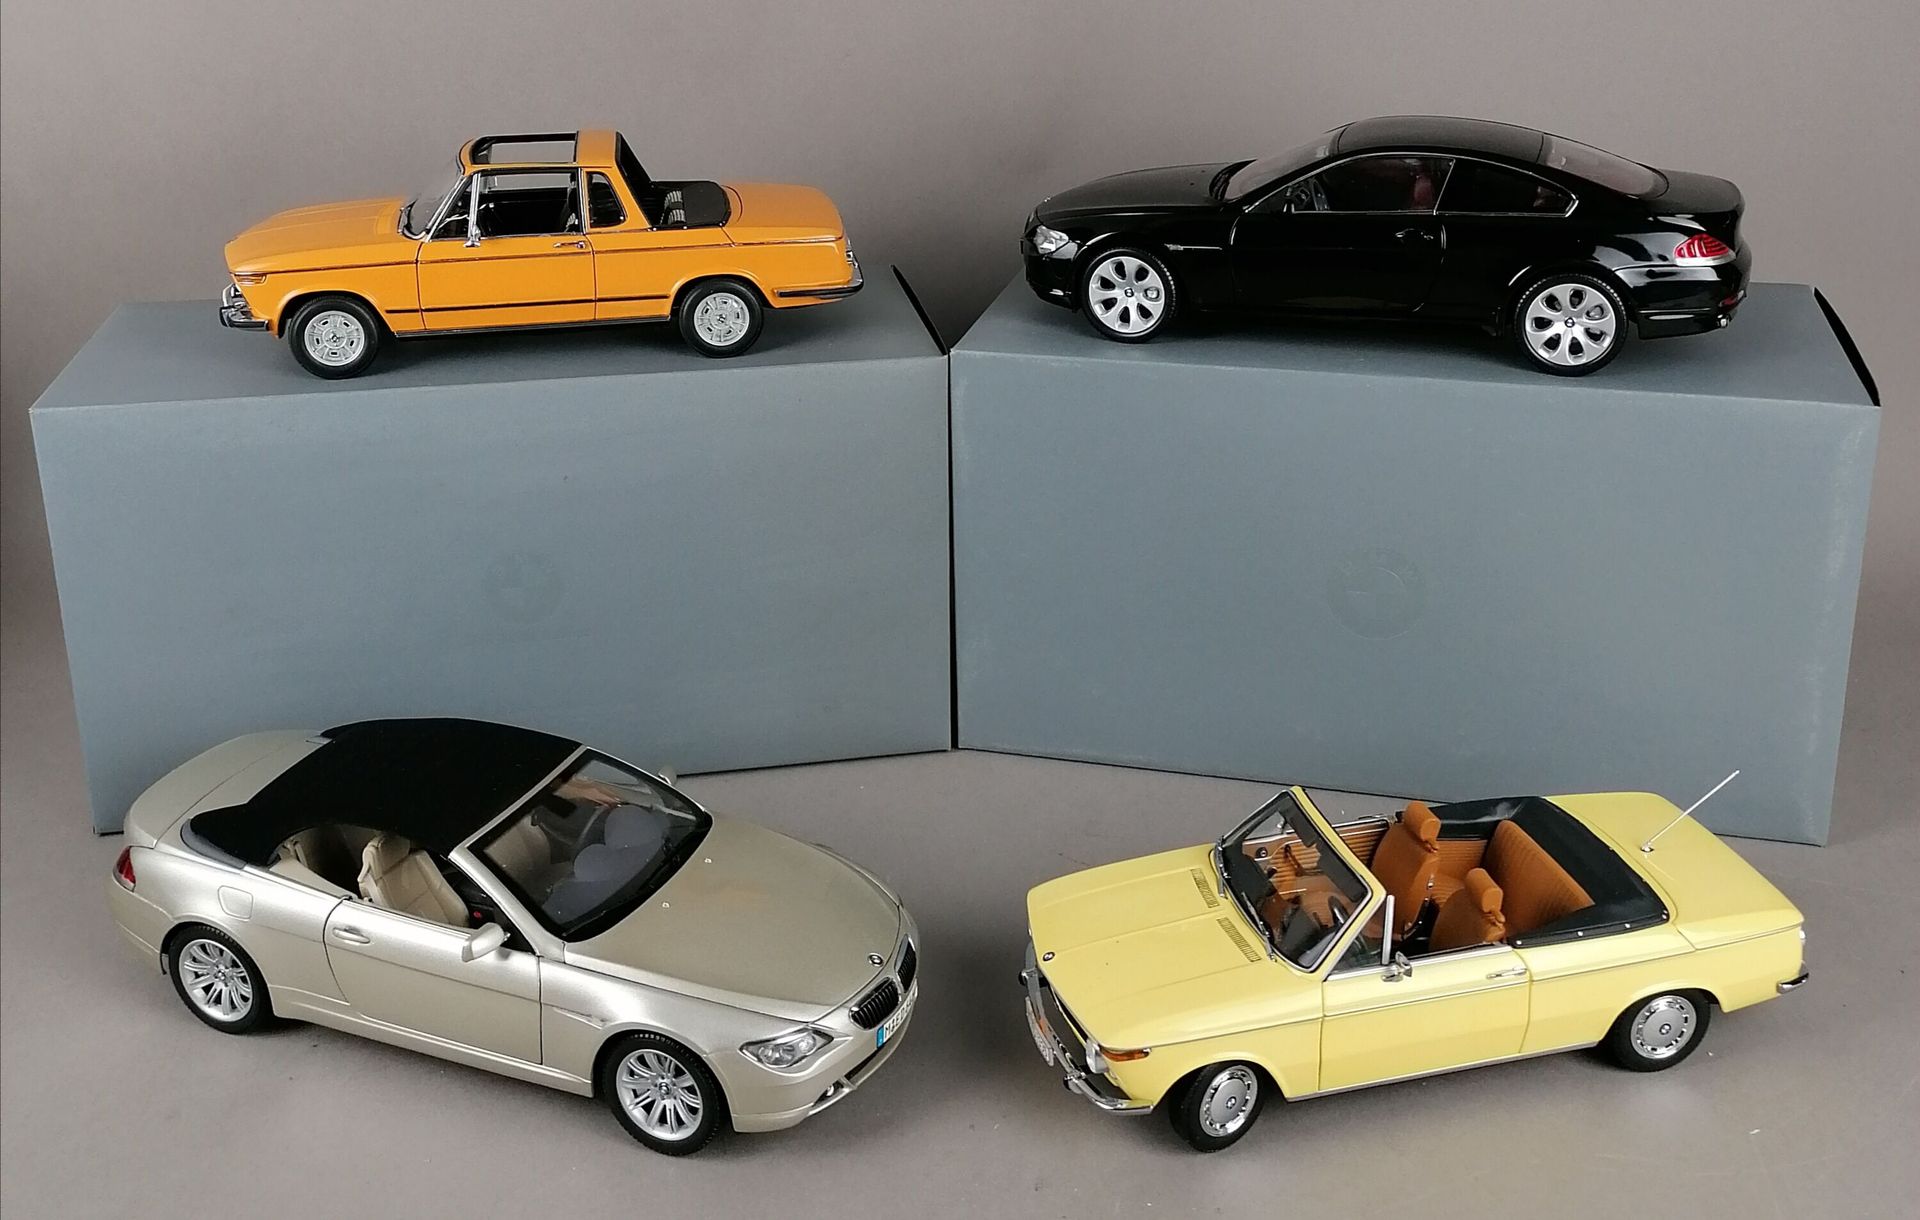 Null BMW - FOUR BMW 1/18 scale:

2x 2002 Cabrio/Convertible

1x 6er Cabrio 6 Ser&hellip;